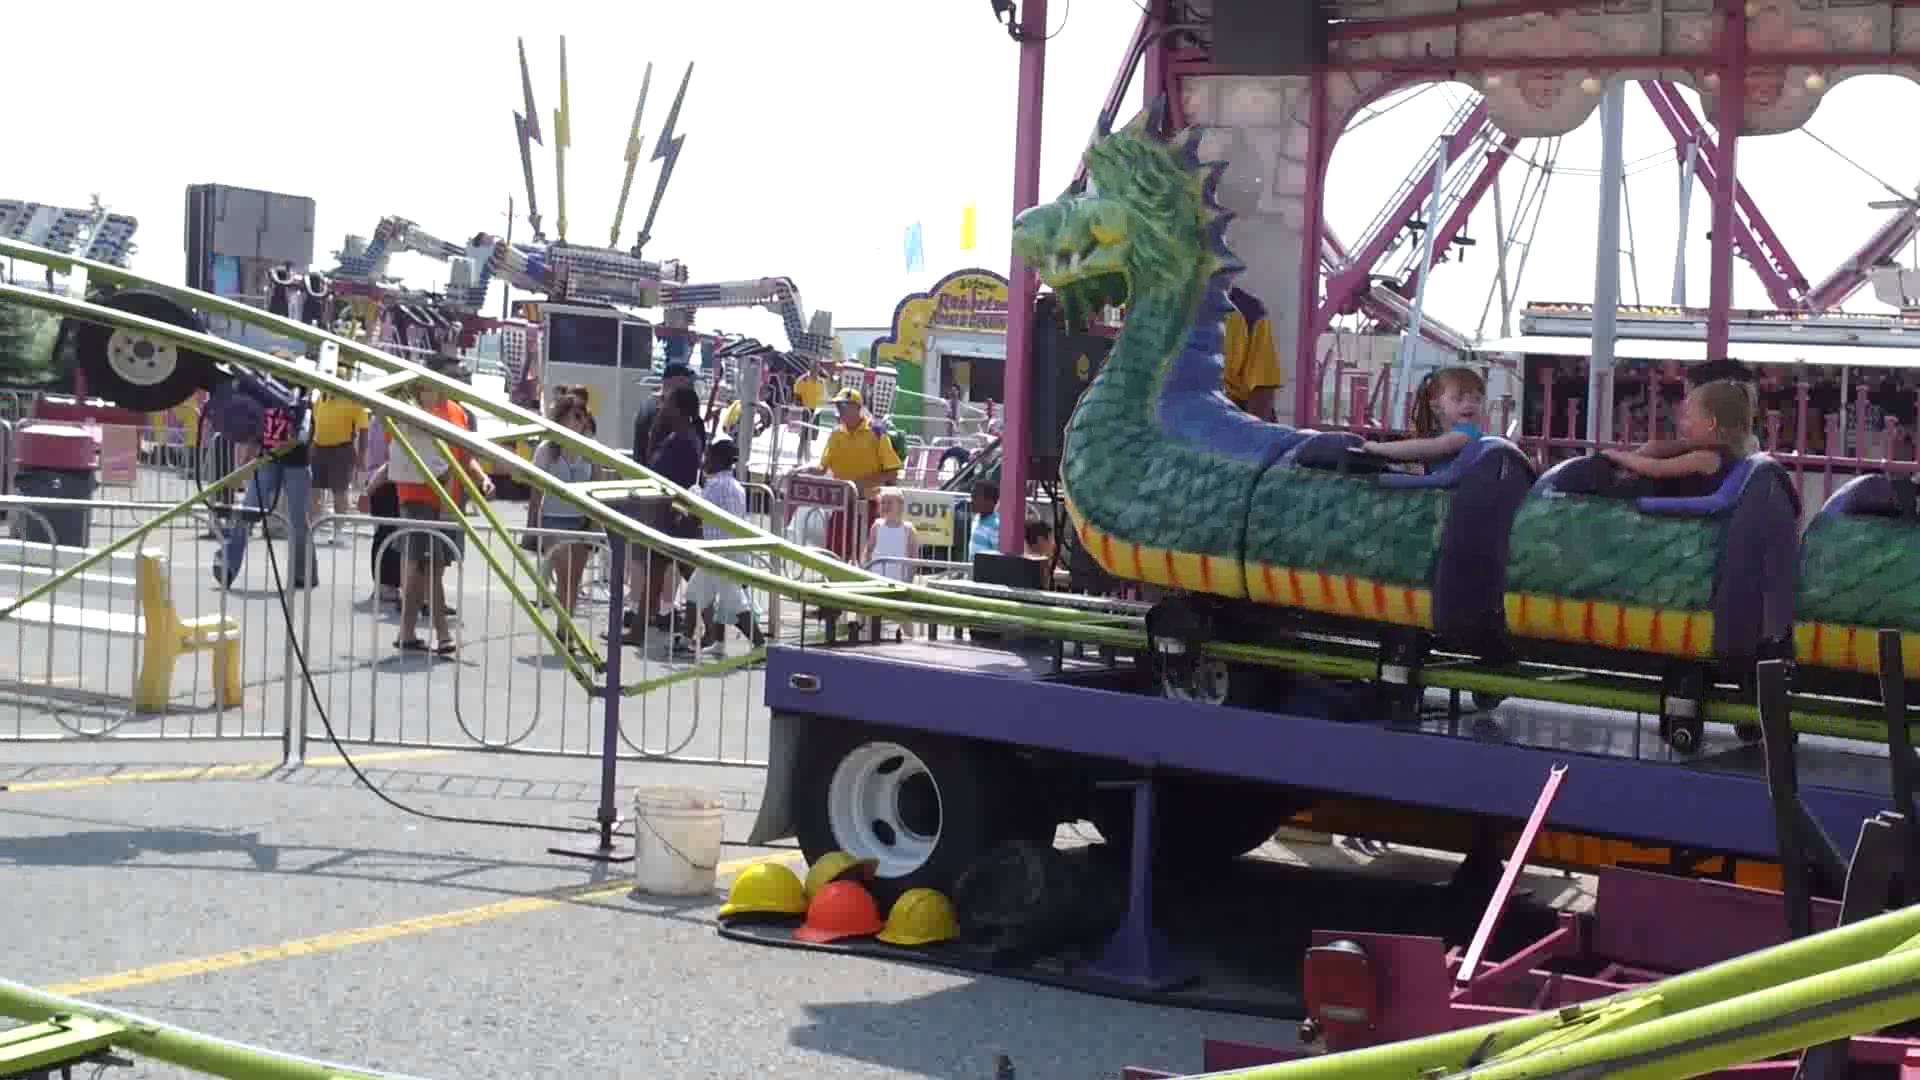 Bella dragon ride Whitby fair - YouTube